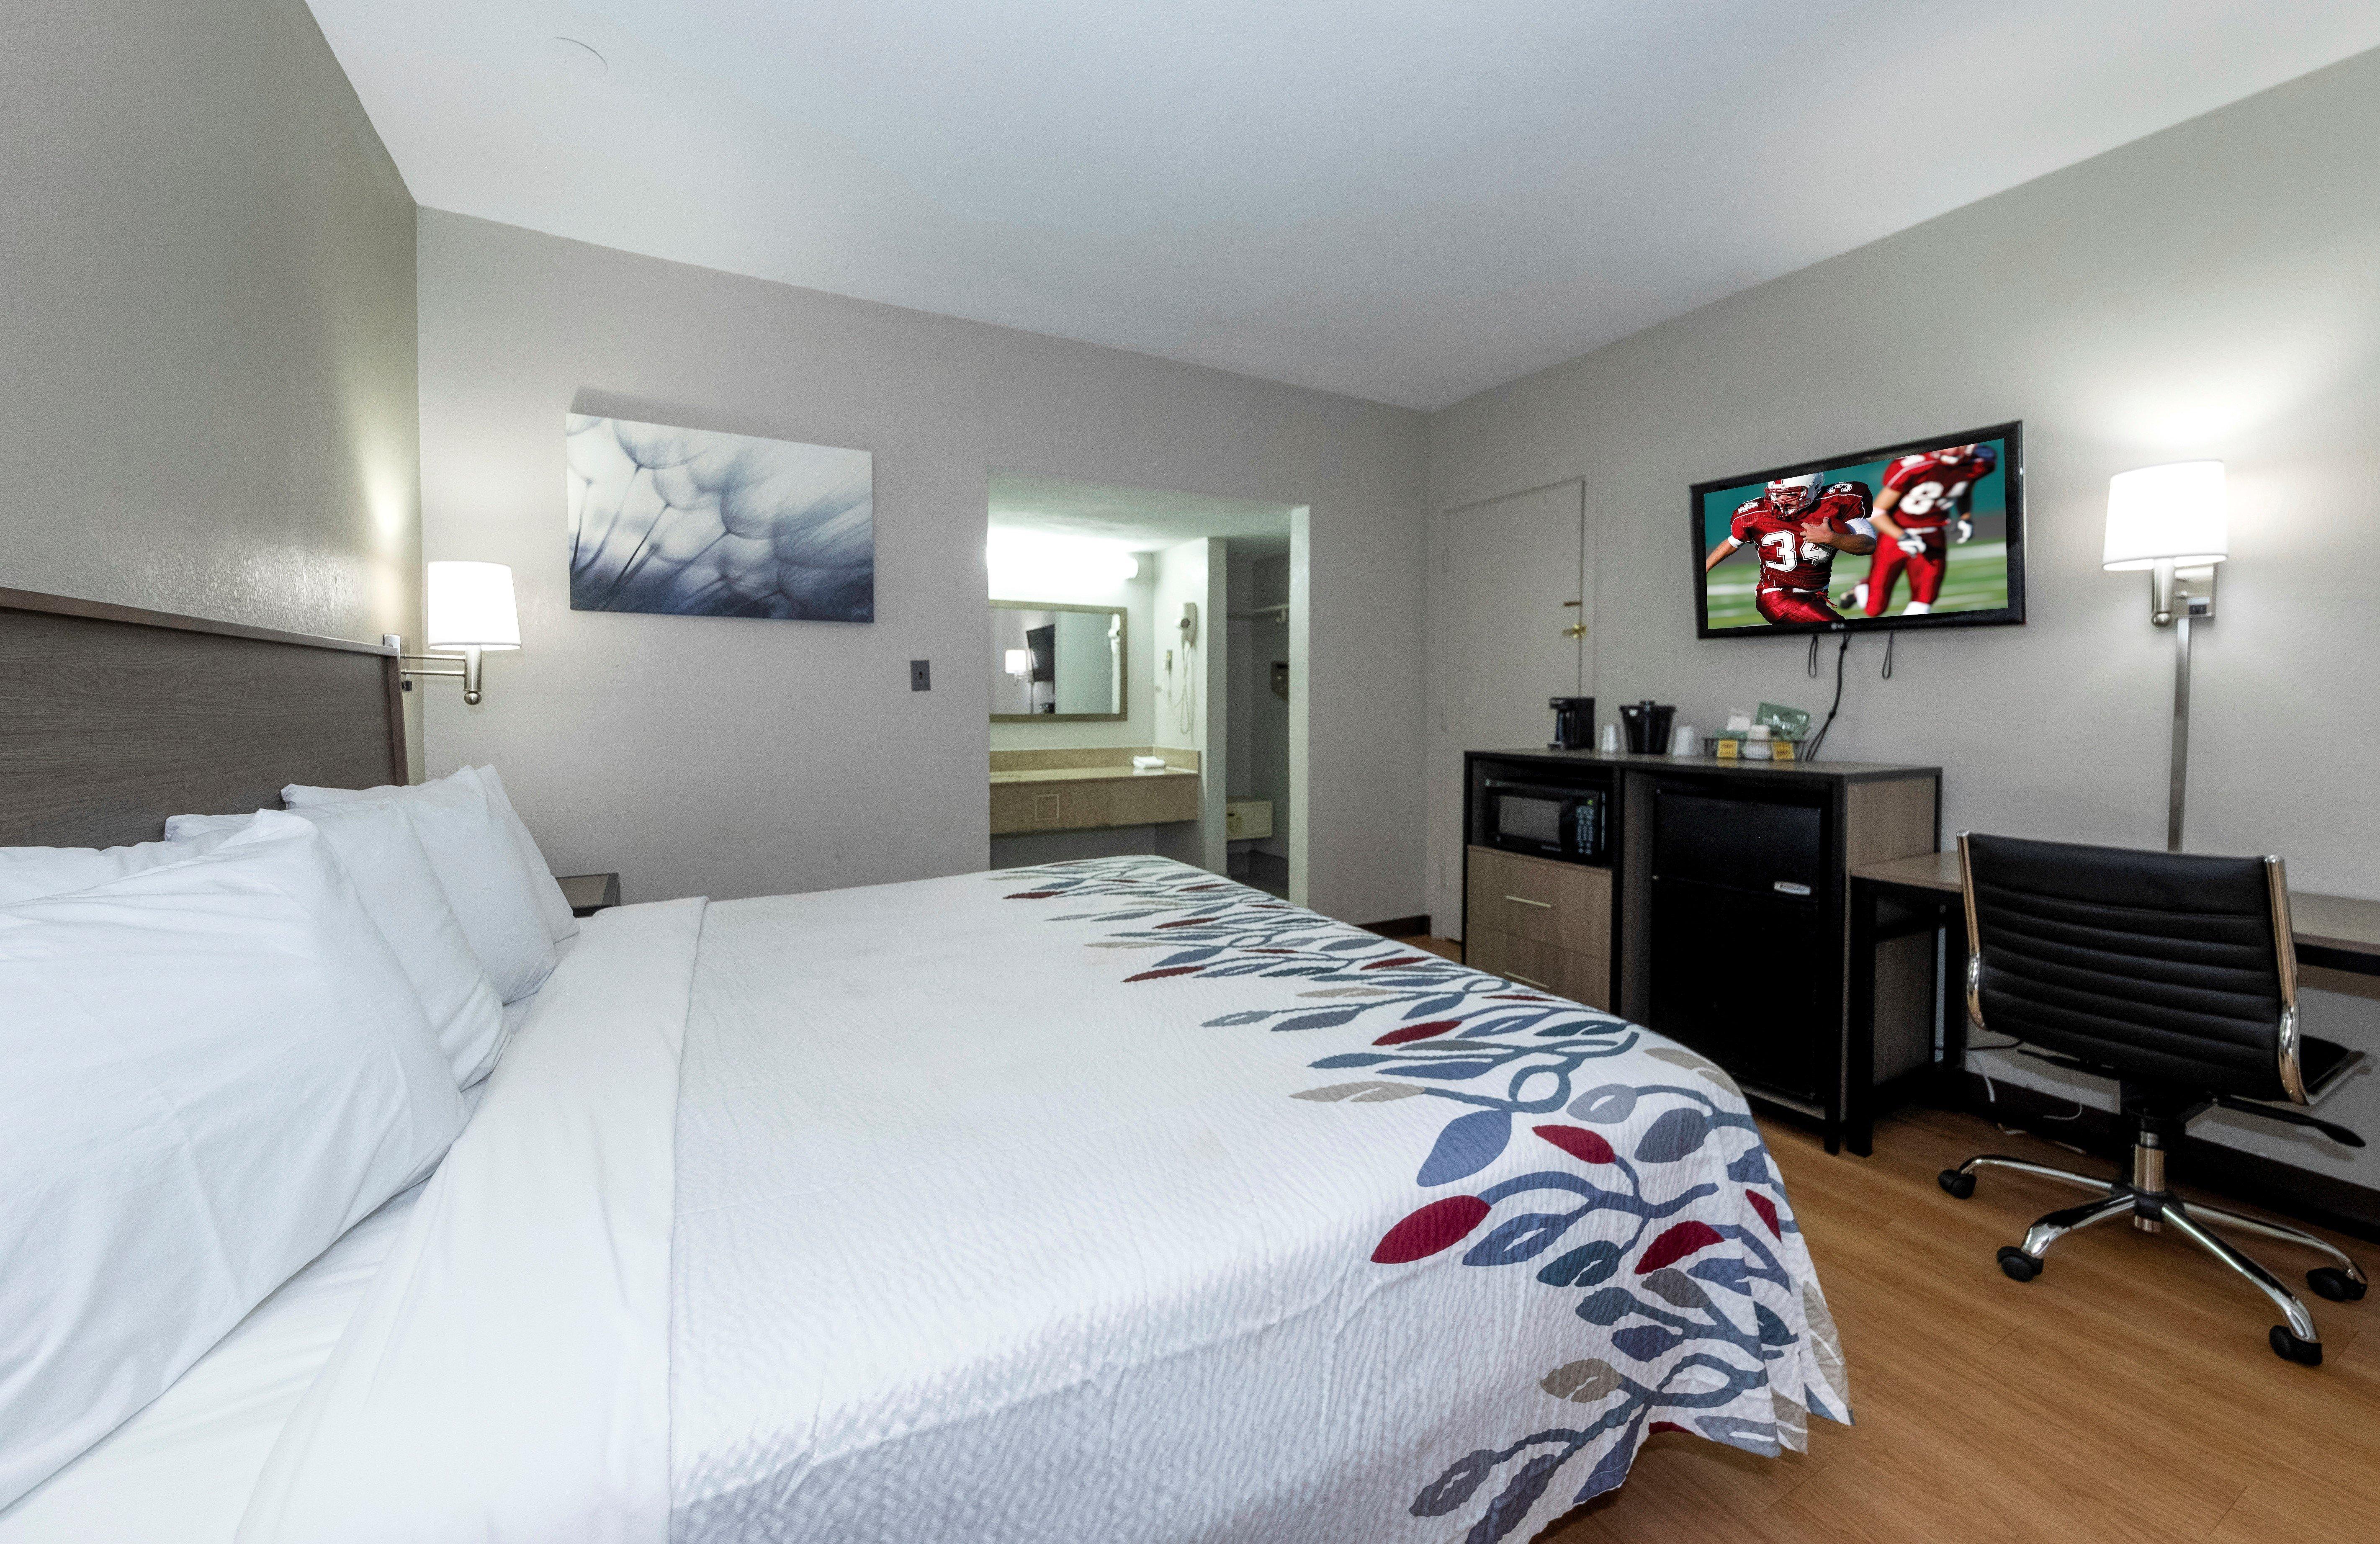 HOTEL RED ROOF INN PETERSBURG - FORT LEE PETERSBURG, VA 2* (United States)  - from £ 36 | HOTELMIX